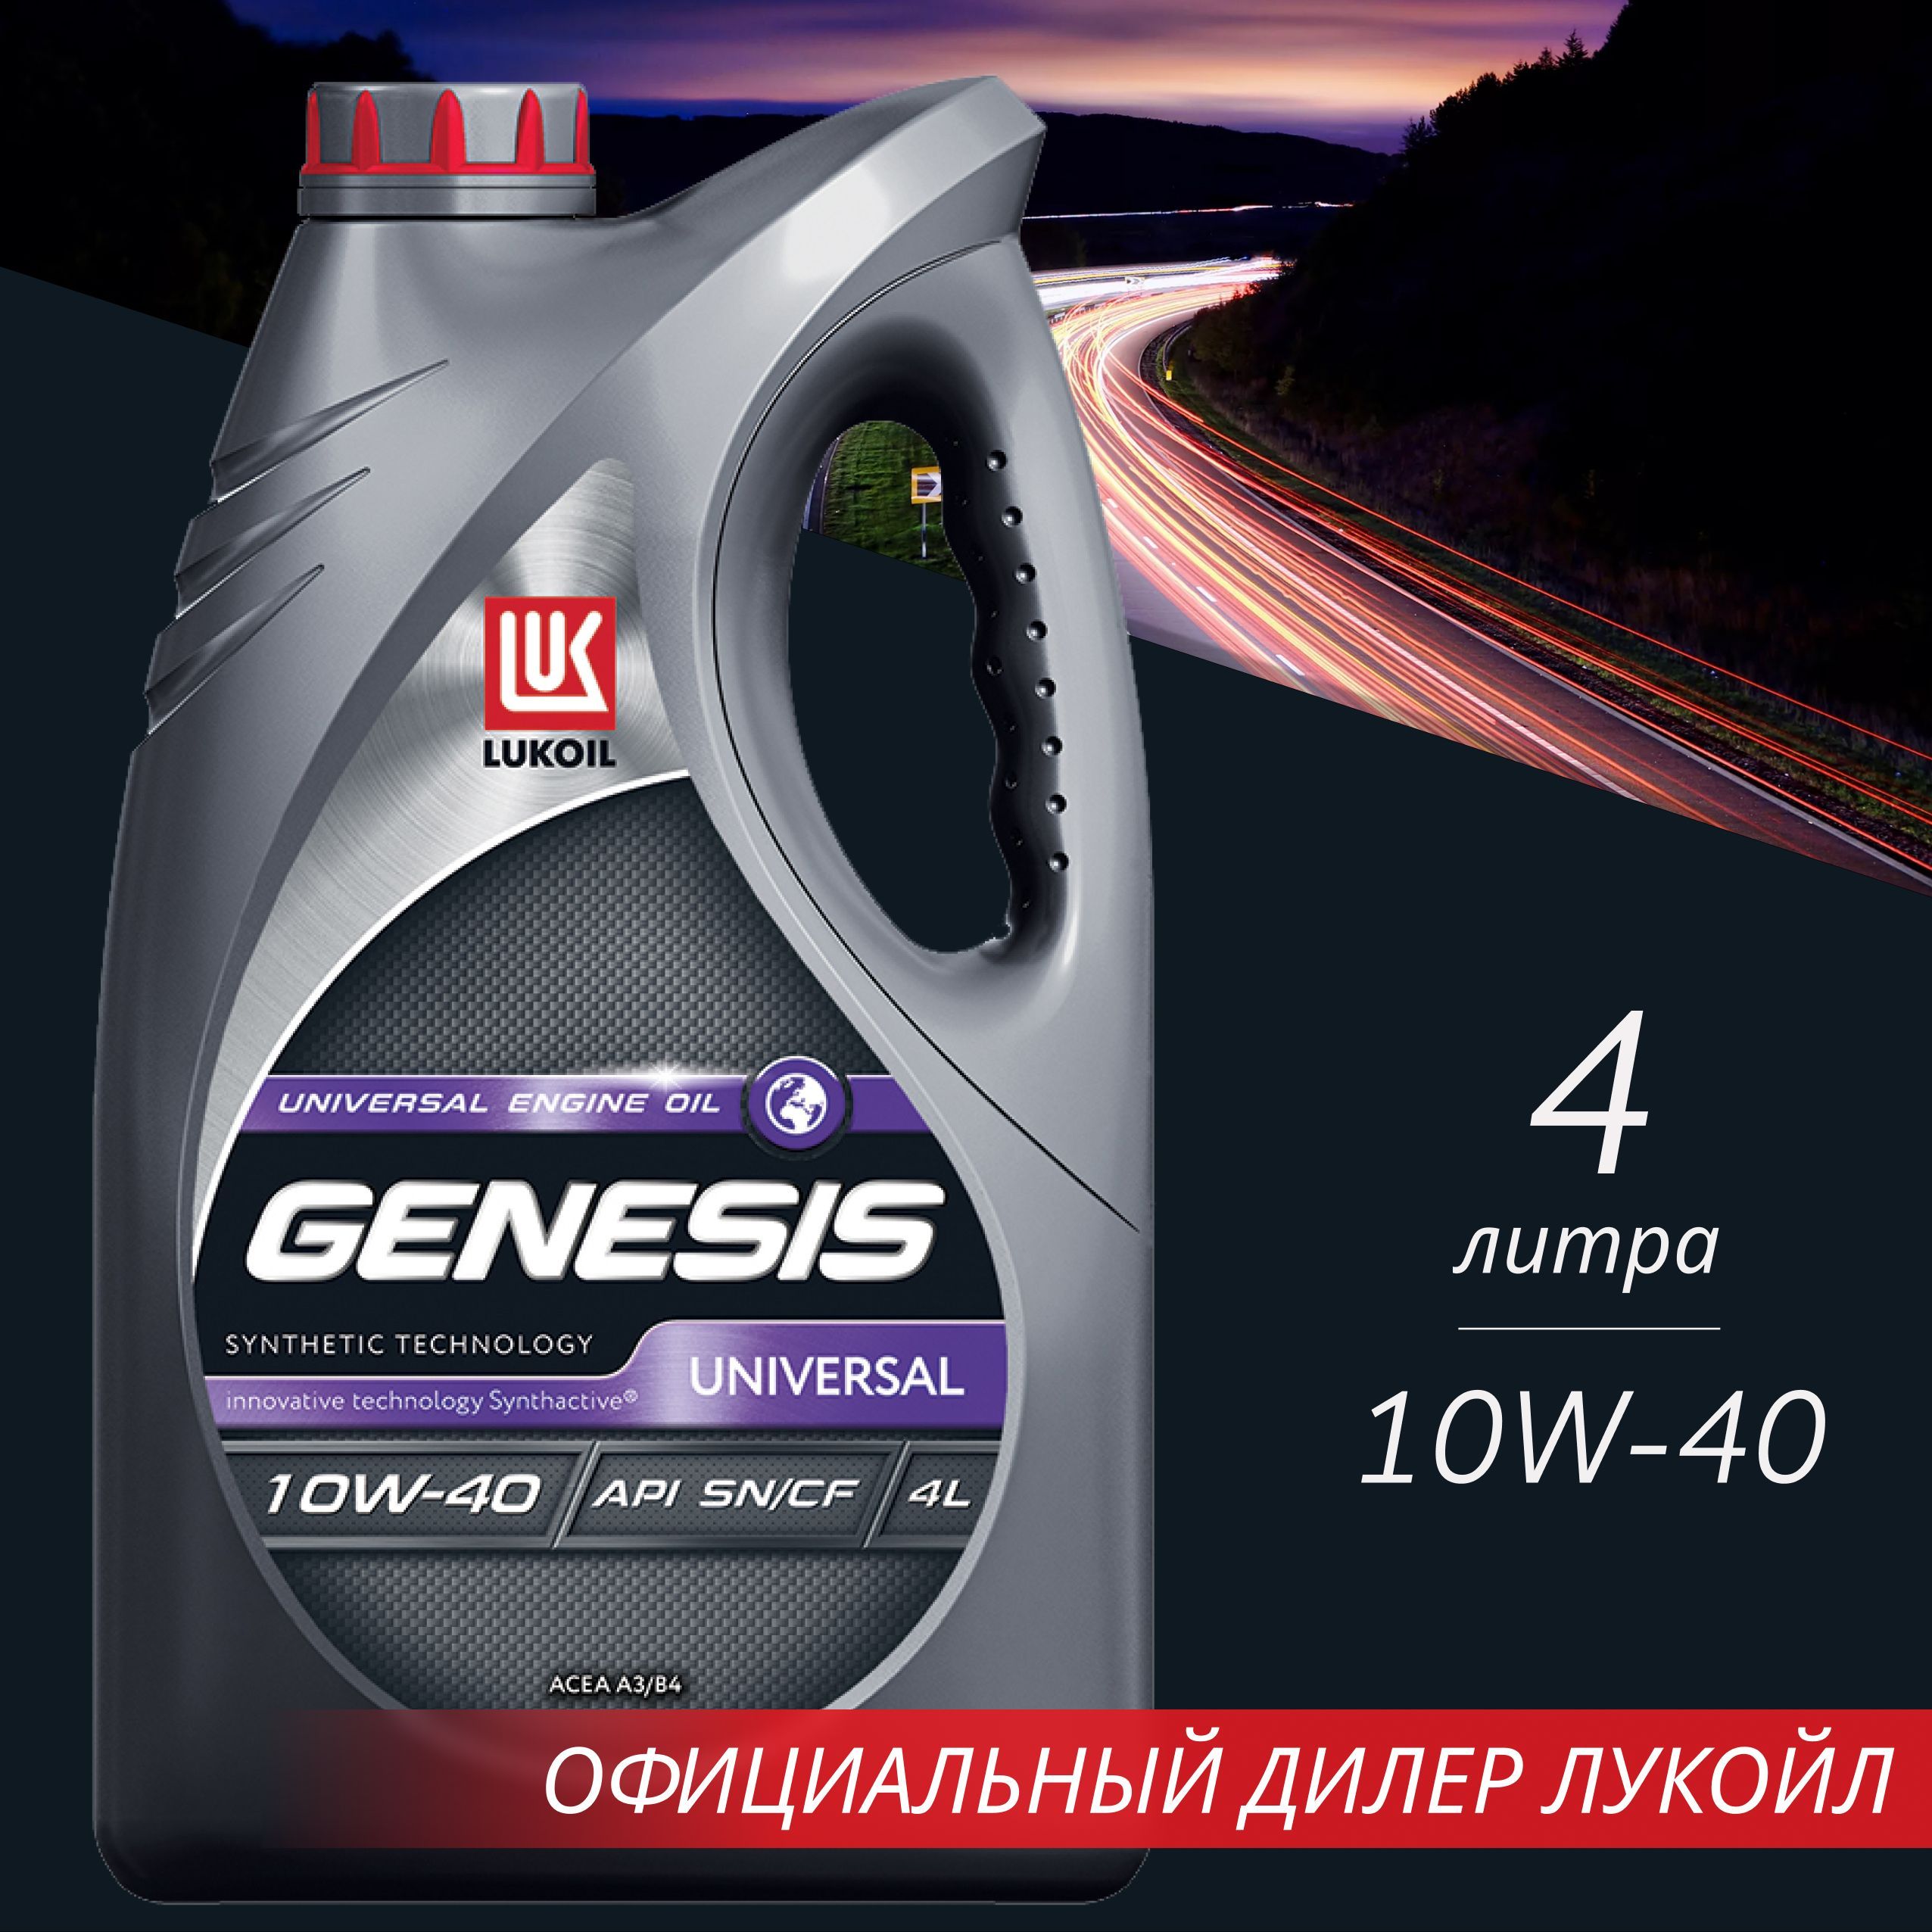 Лукойл генезис тесты. Генезис универсал 10w 40. 3148646 Lukoil Genesis Universal 10w-40 4l. Лукойл Генезис 10w 40 универсал синтетика. Моторное масло Генезис 10w 40 полусинтетика.